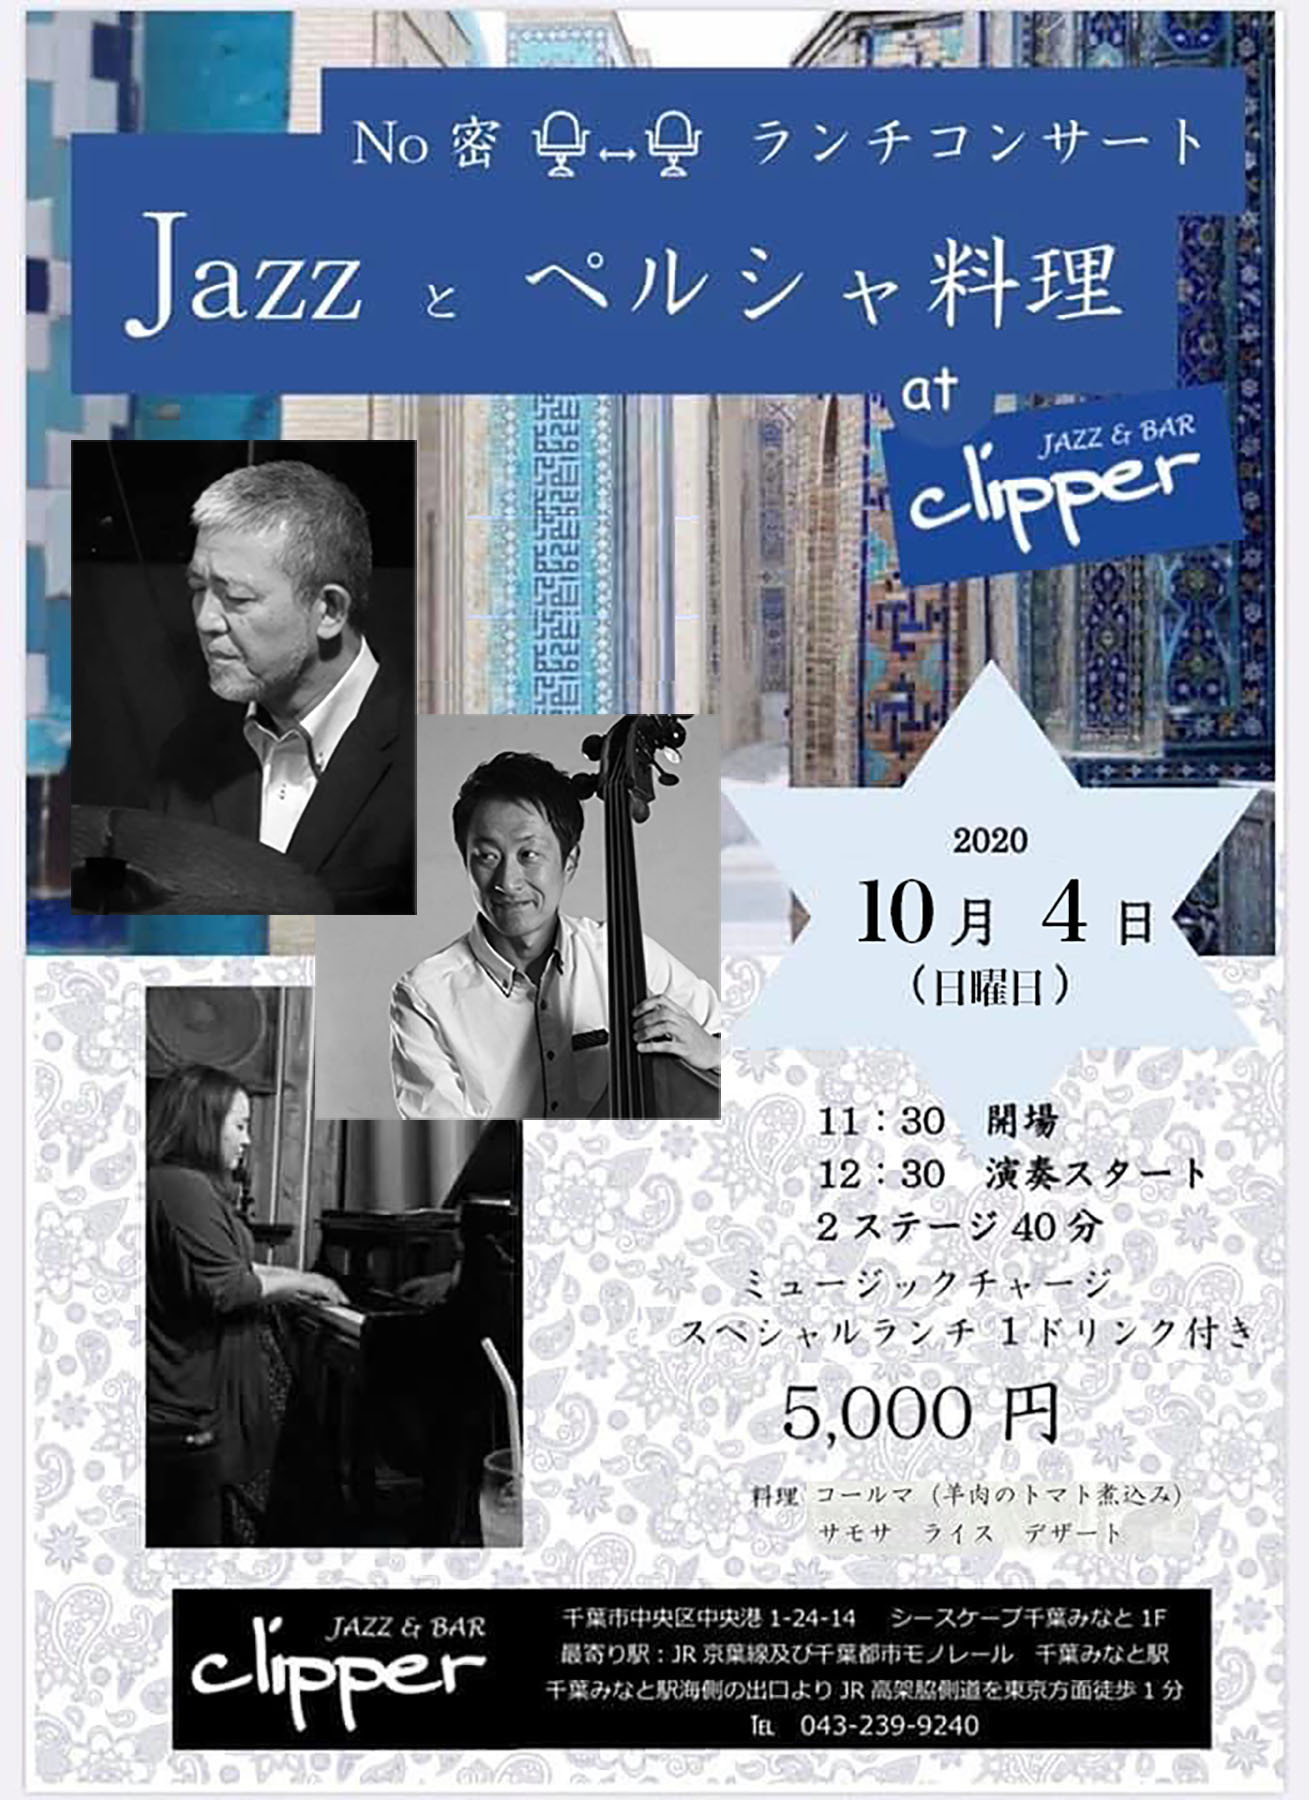 【No密ランチコンサート】Jazzとペルシャ料理 at clipper